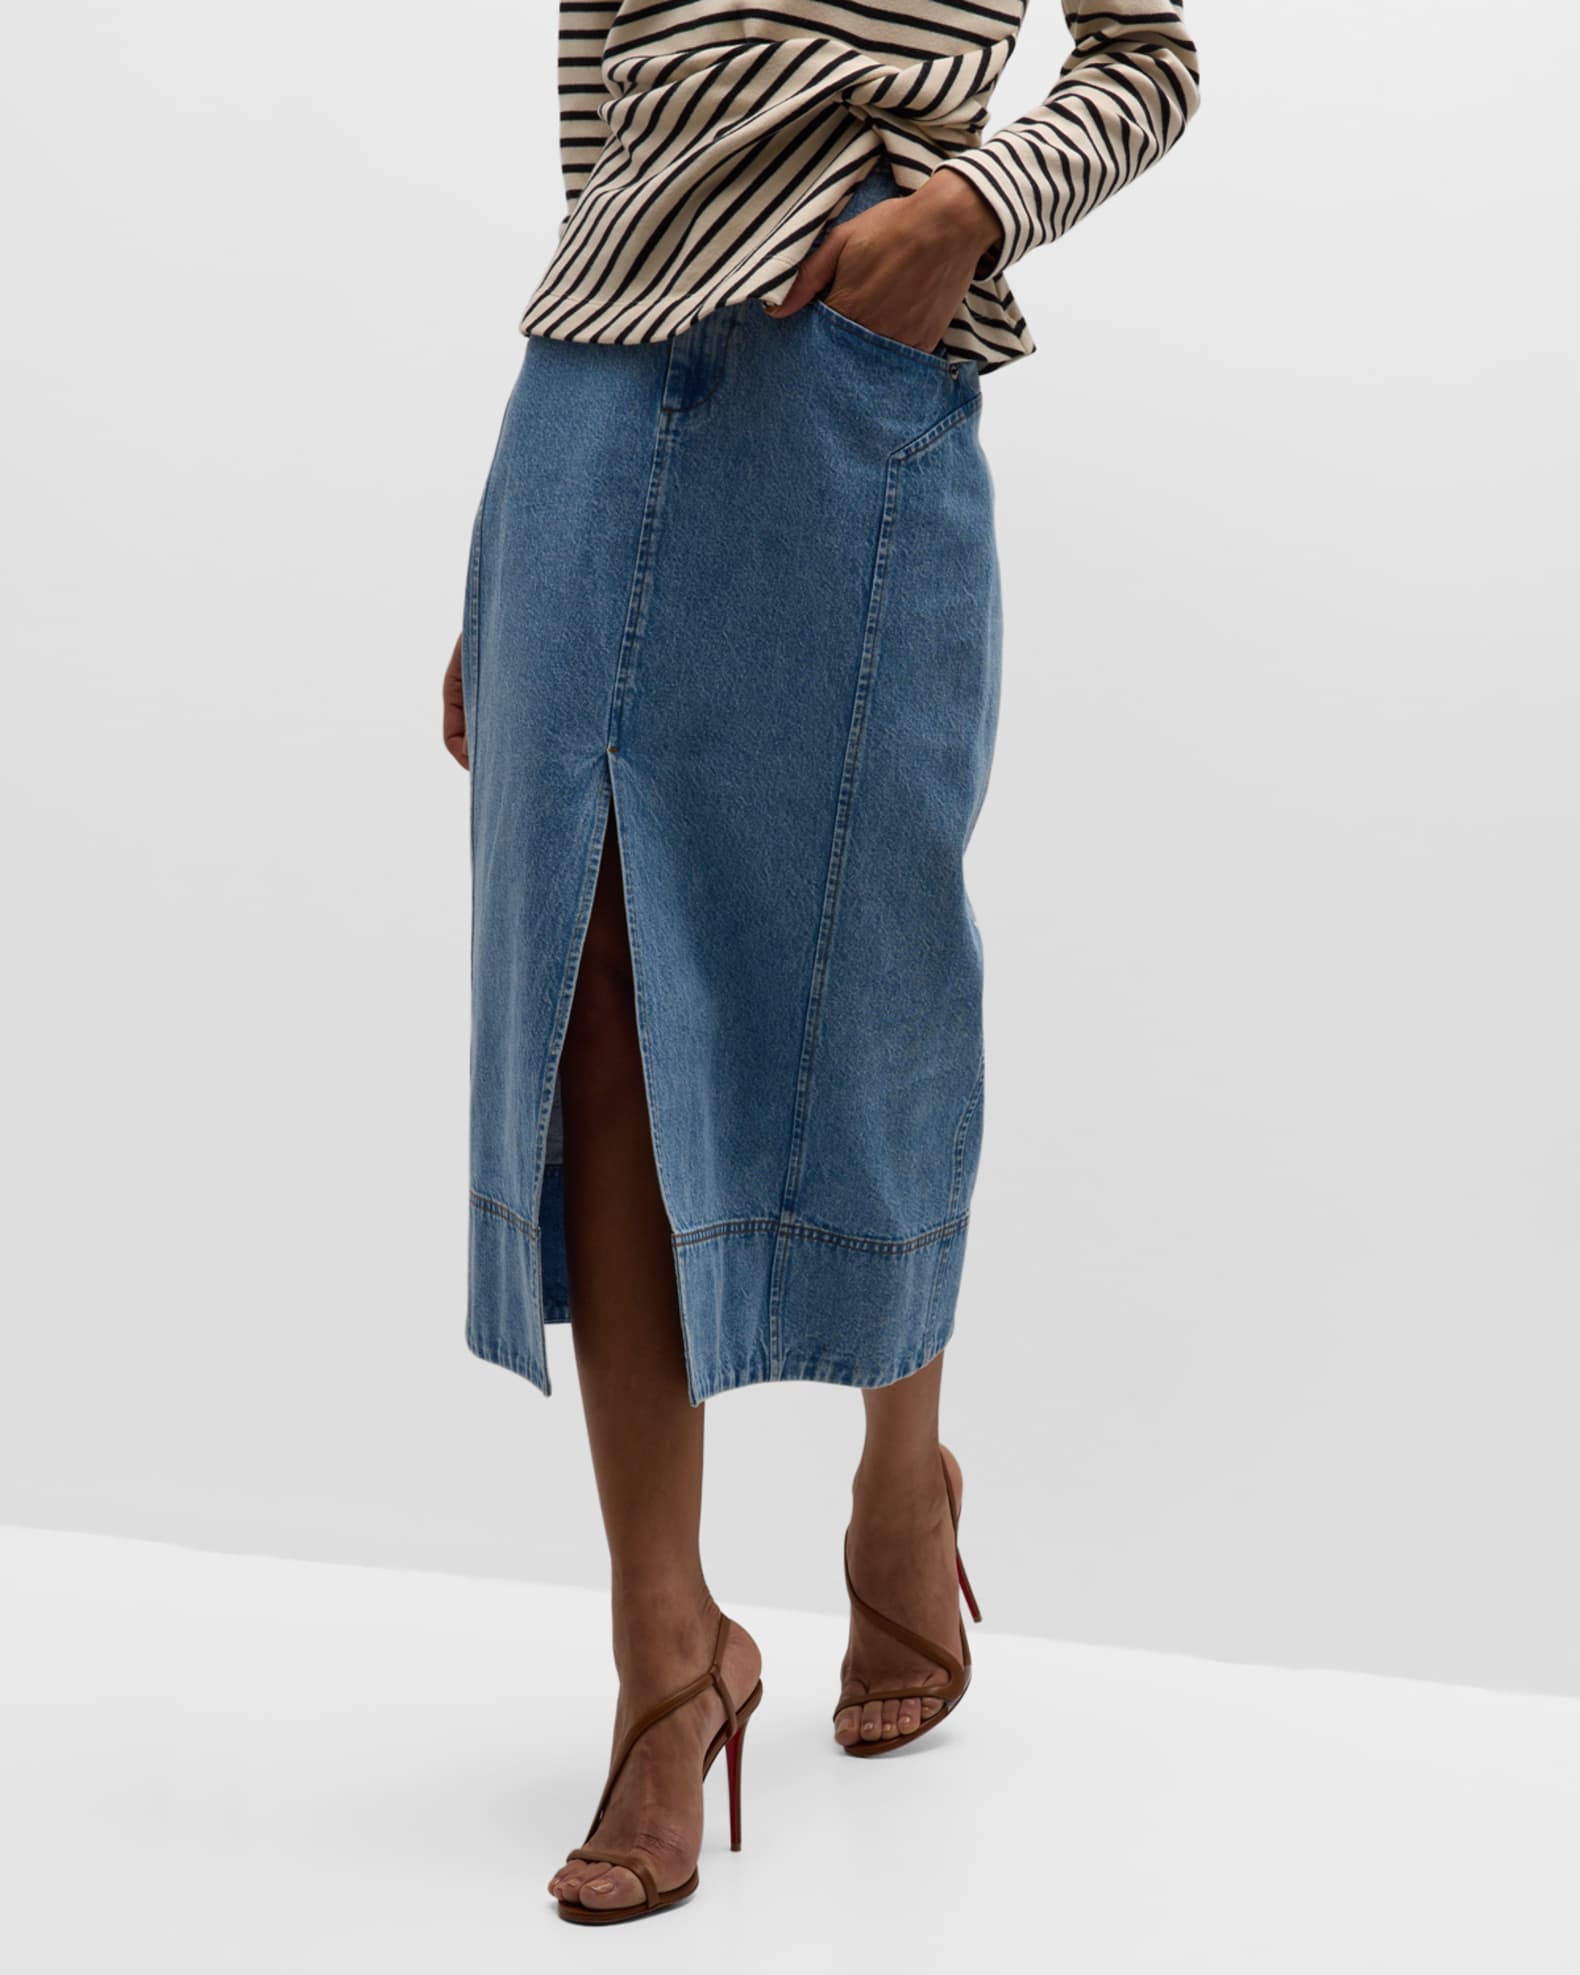 Tanya Taylor Christina Denim High-Waist Midi Skirt | Neiman Marcus